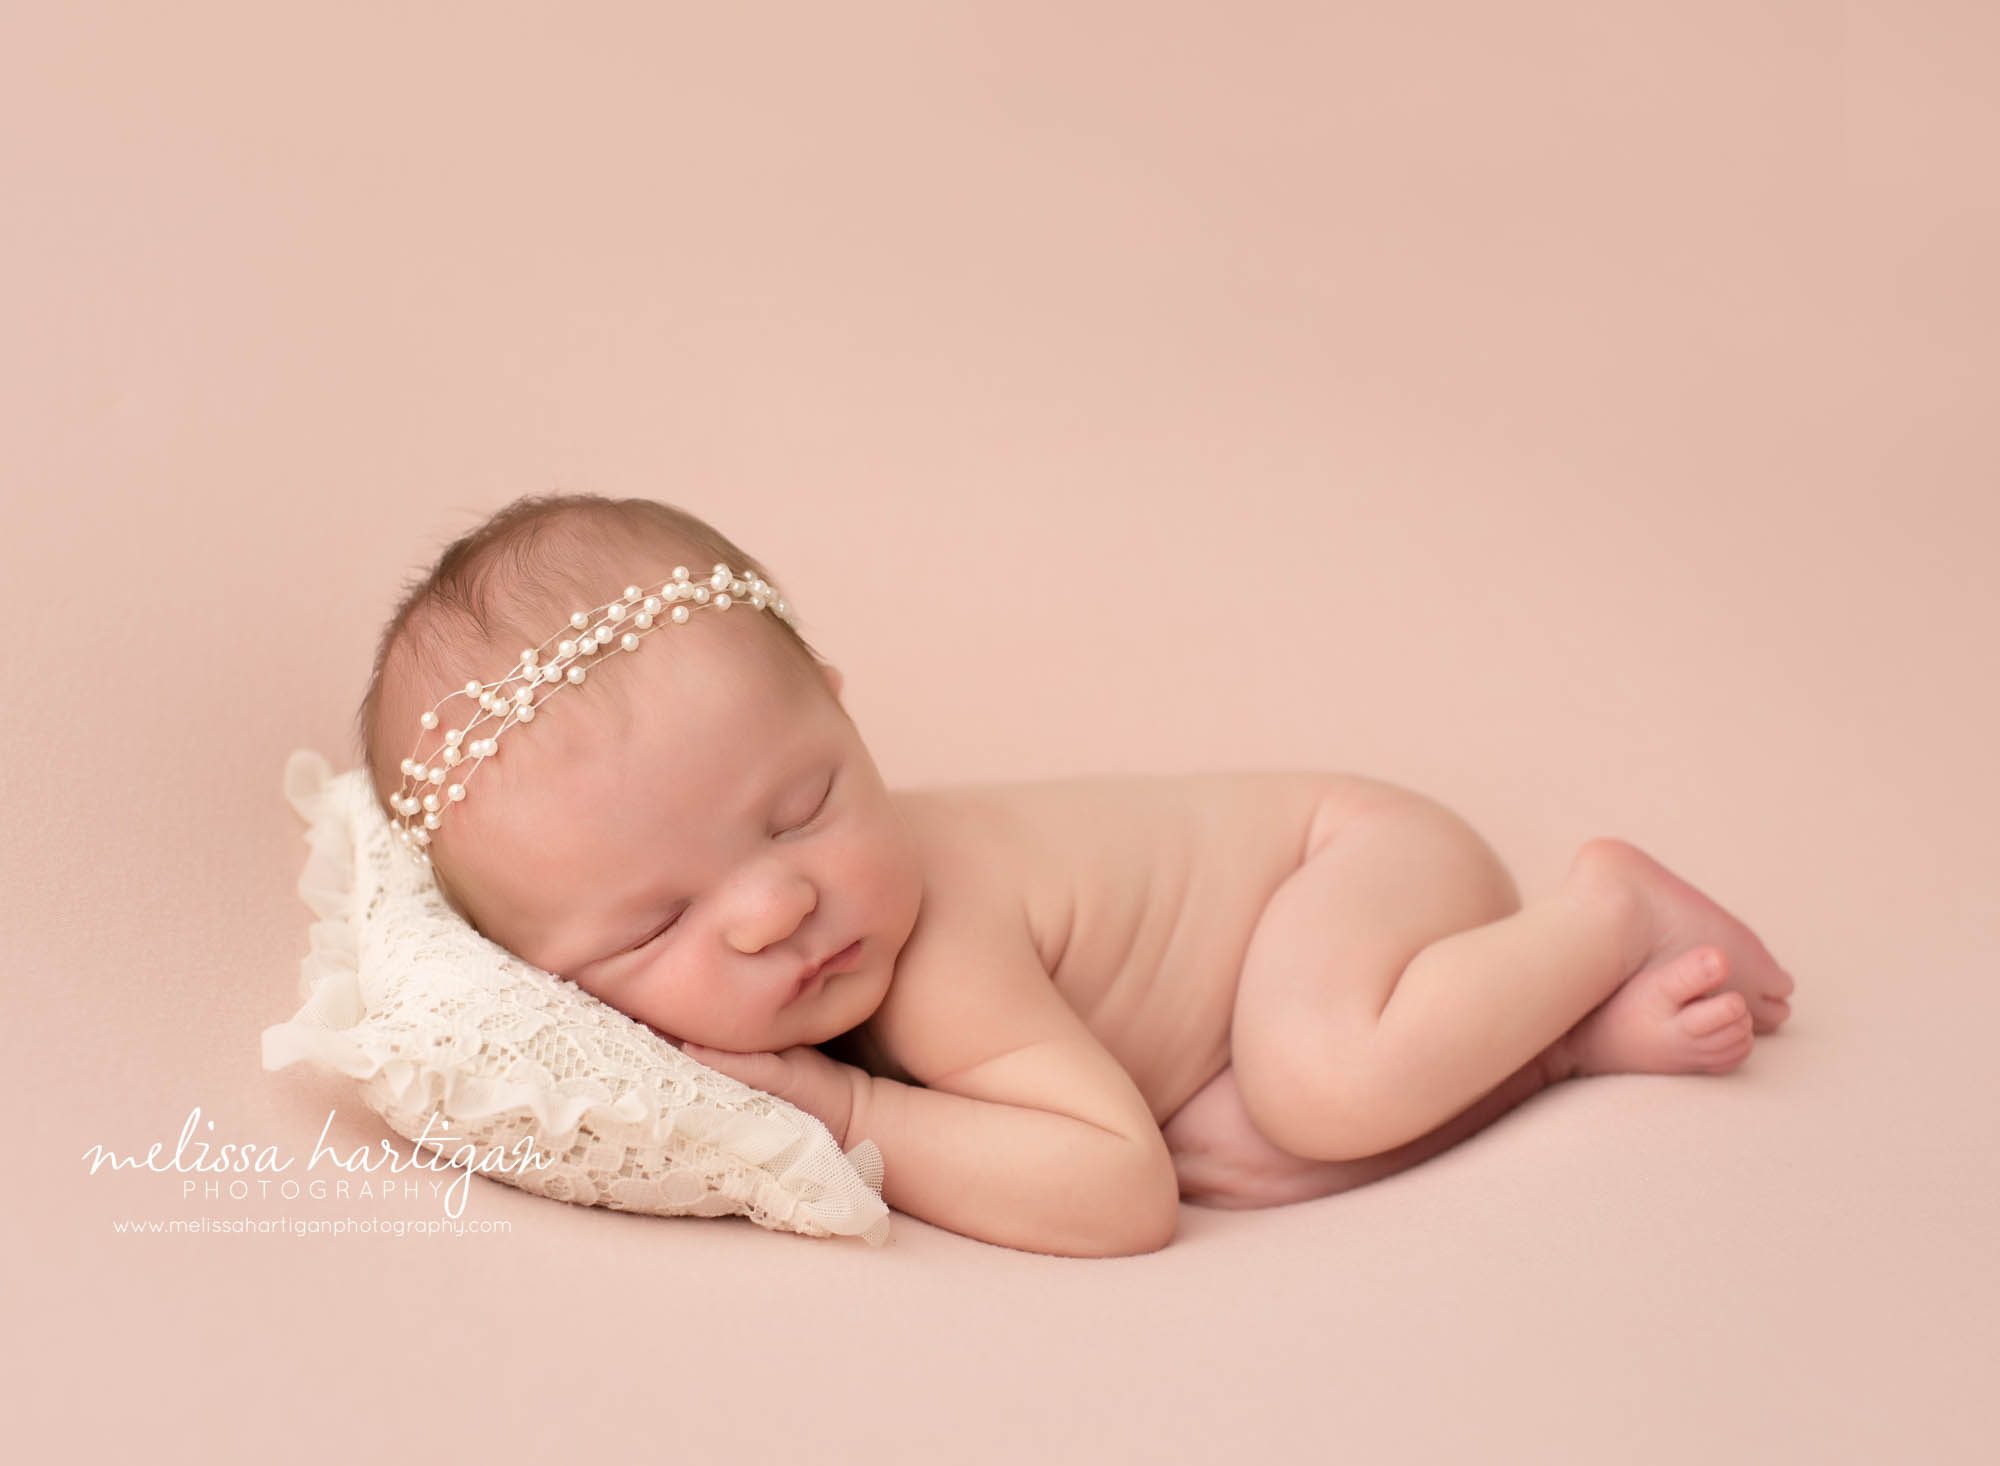 Newborn baby girl posed on lace newborn sized prop pillow with white beaded headband CT newborn Photography